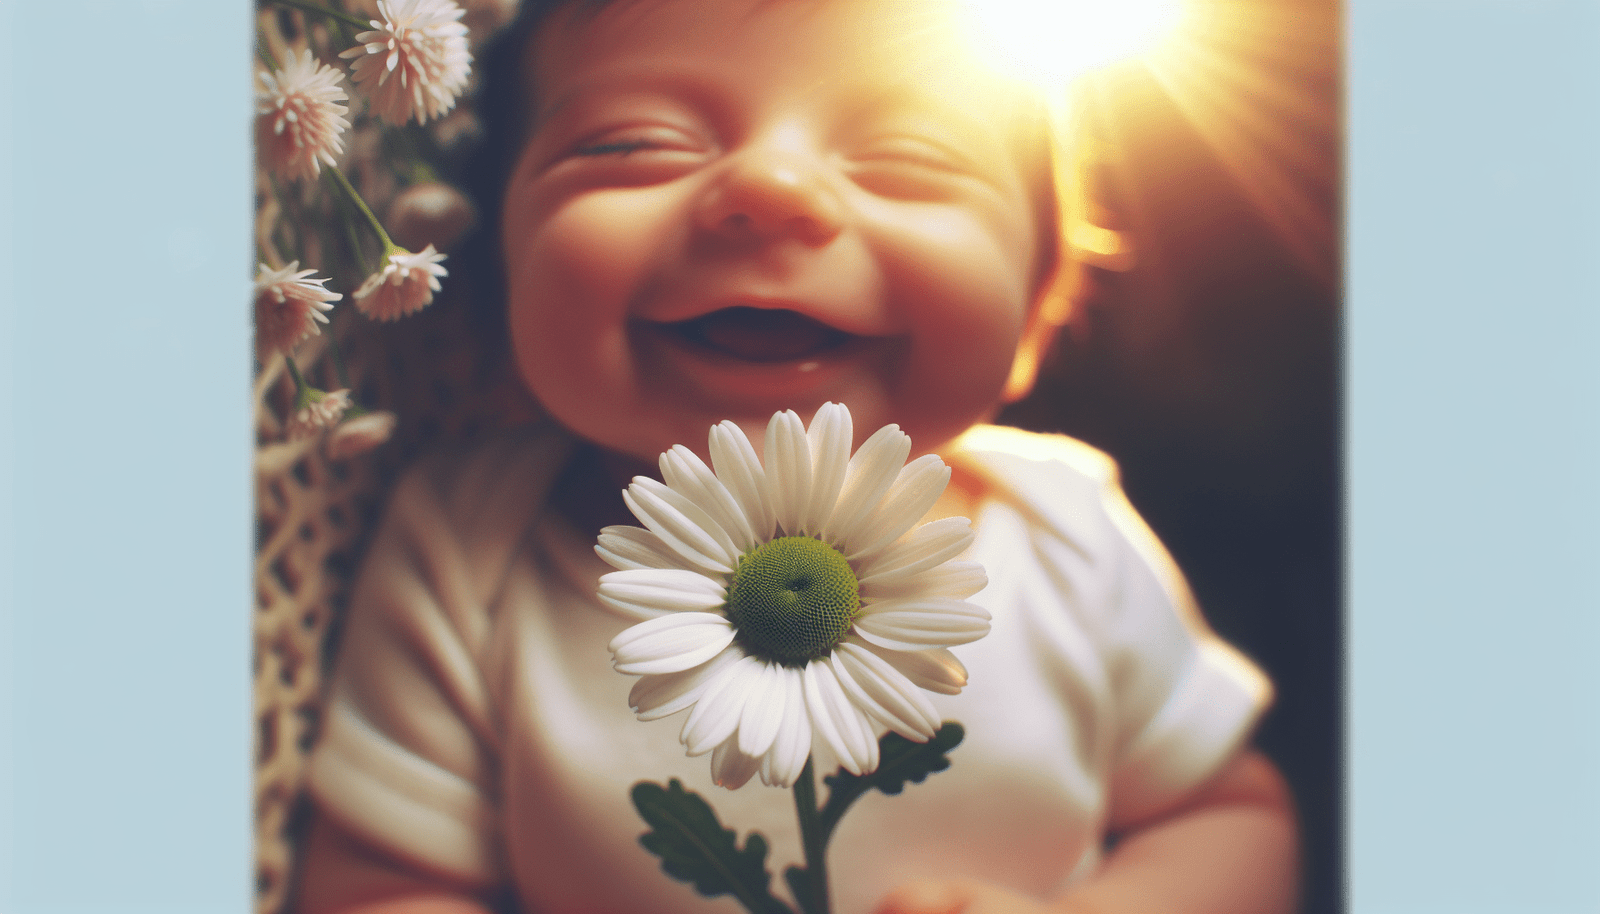 When Do Babies Start Smiling?